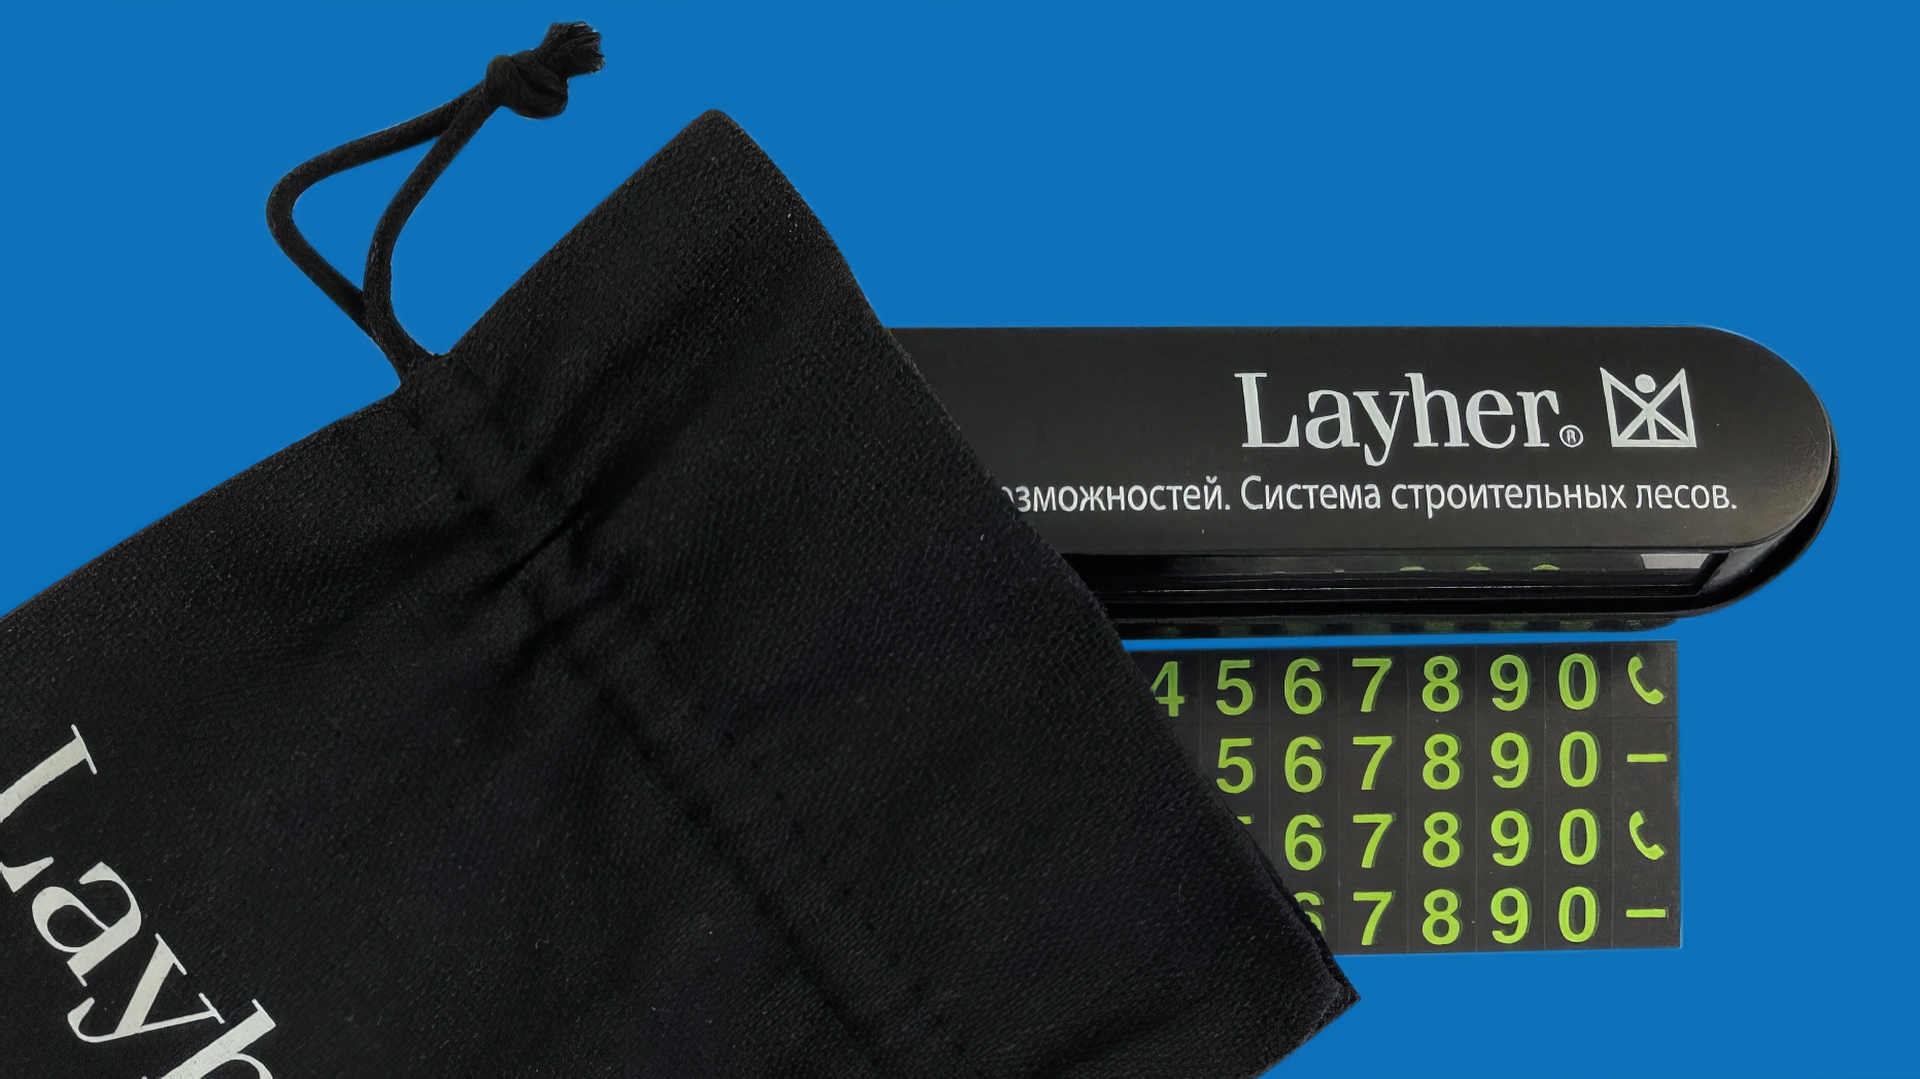 Layher - Подарочный новогодний набор